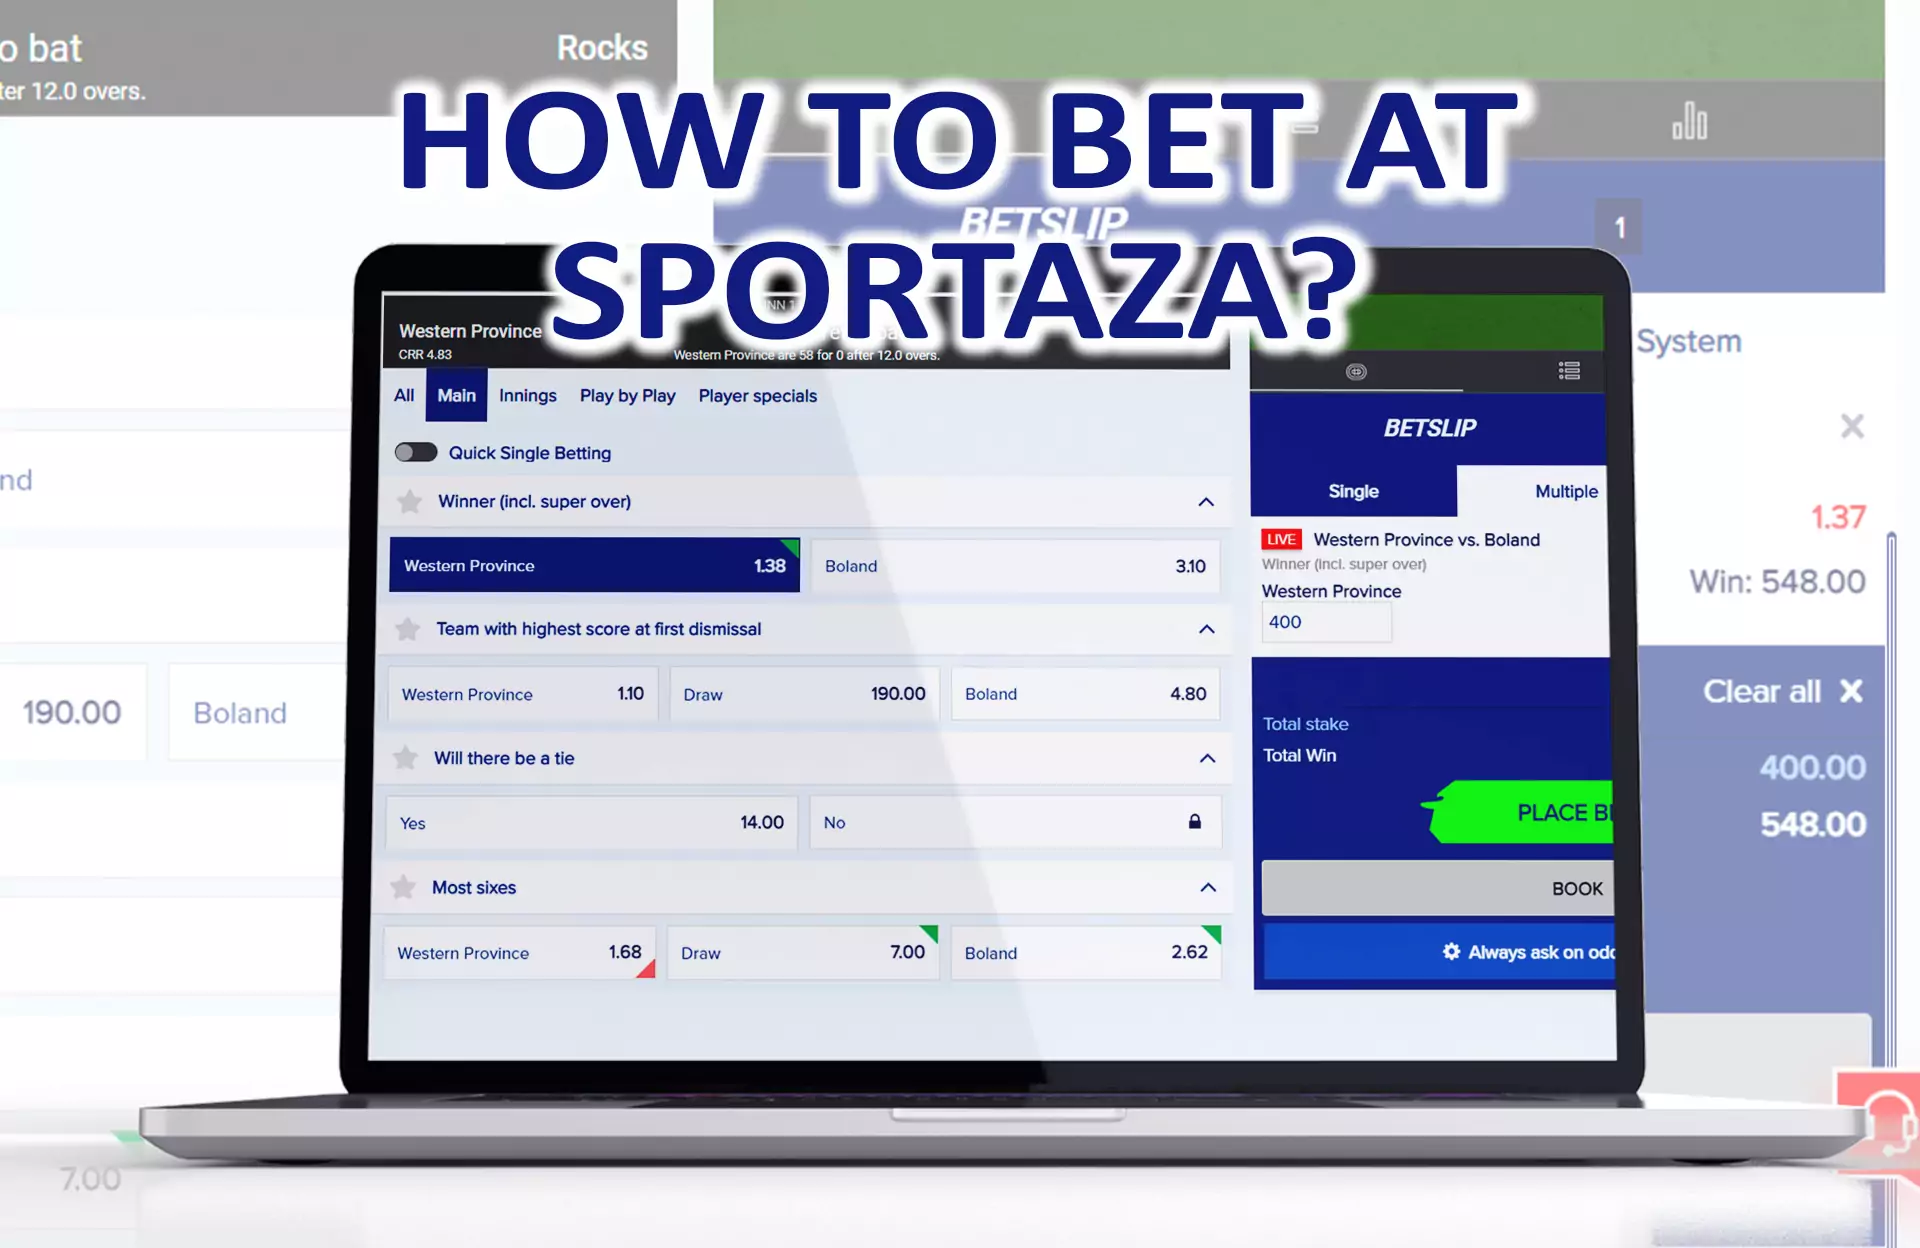 Sportaza offers many sports betting options.